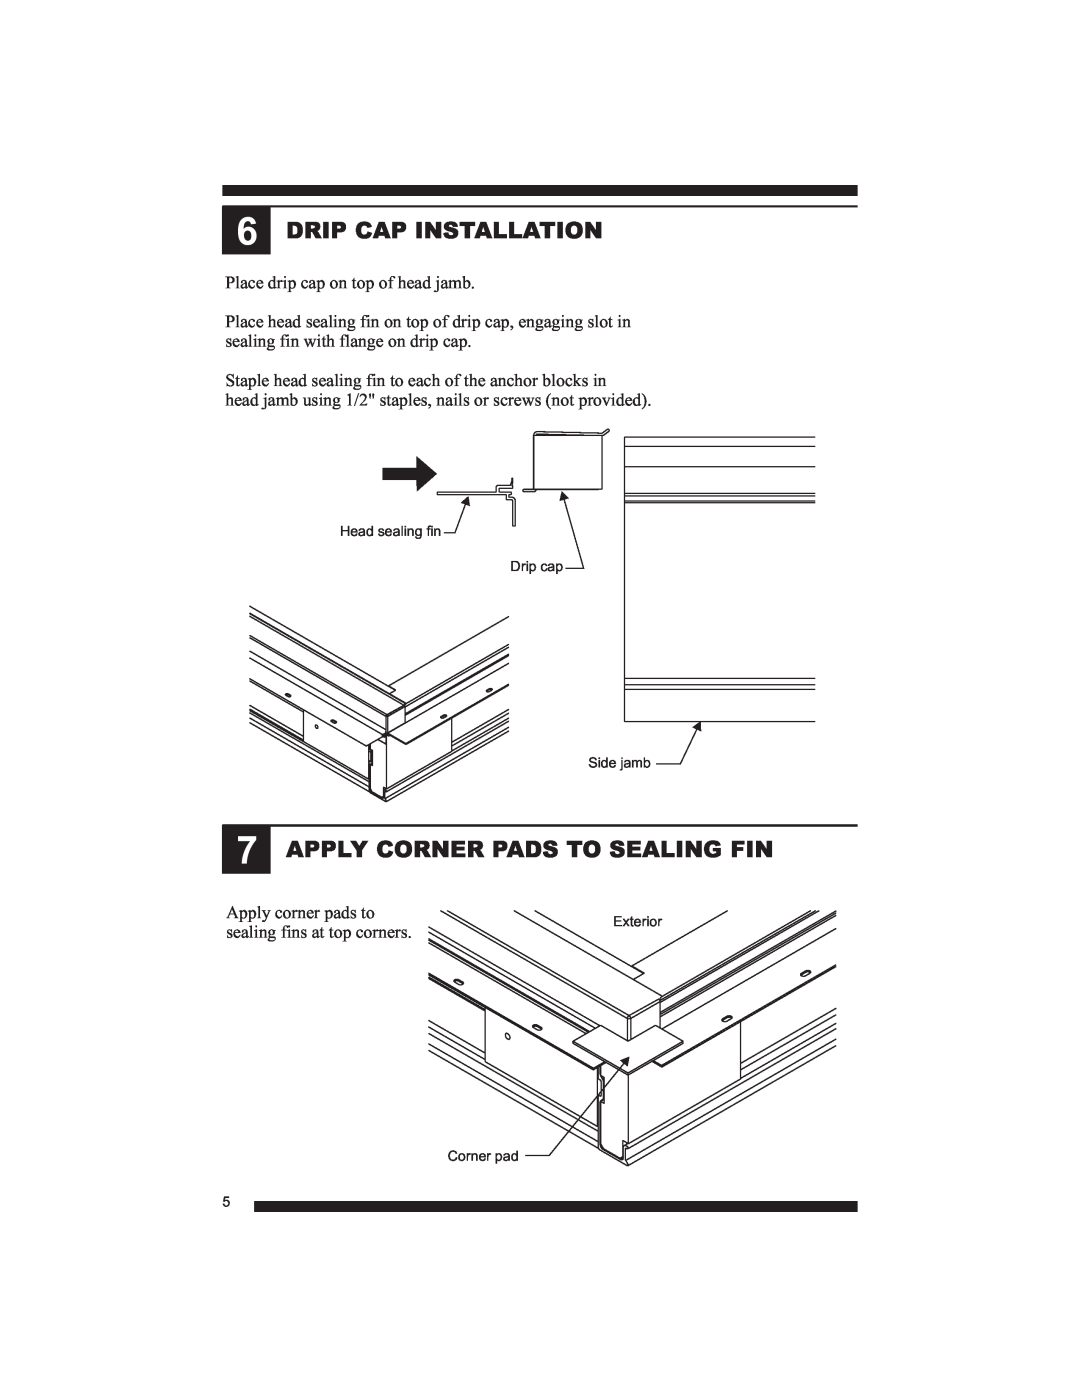 Therma-Tru Smooth-Star manual Drip Cap Installation, Apply Corner Pads To Sealing Fin, Head sealing fin Drip cap Side jamb 